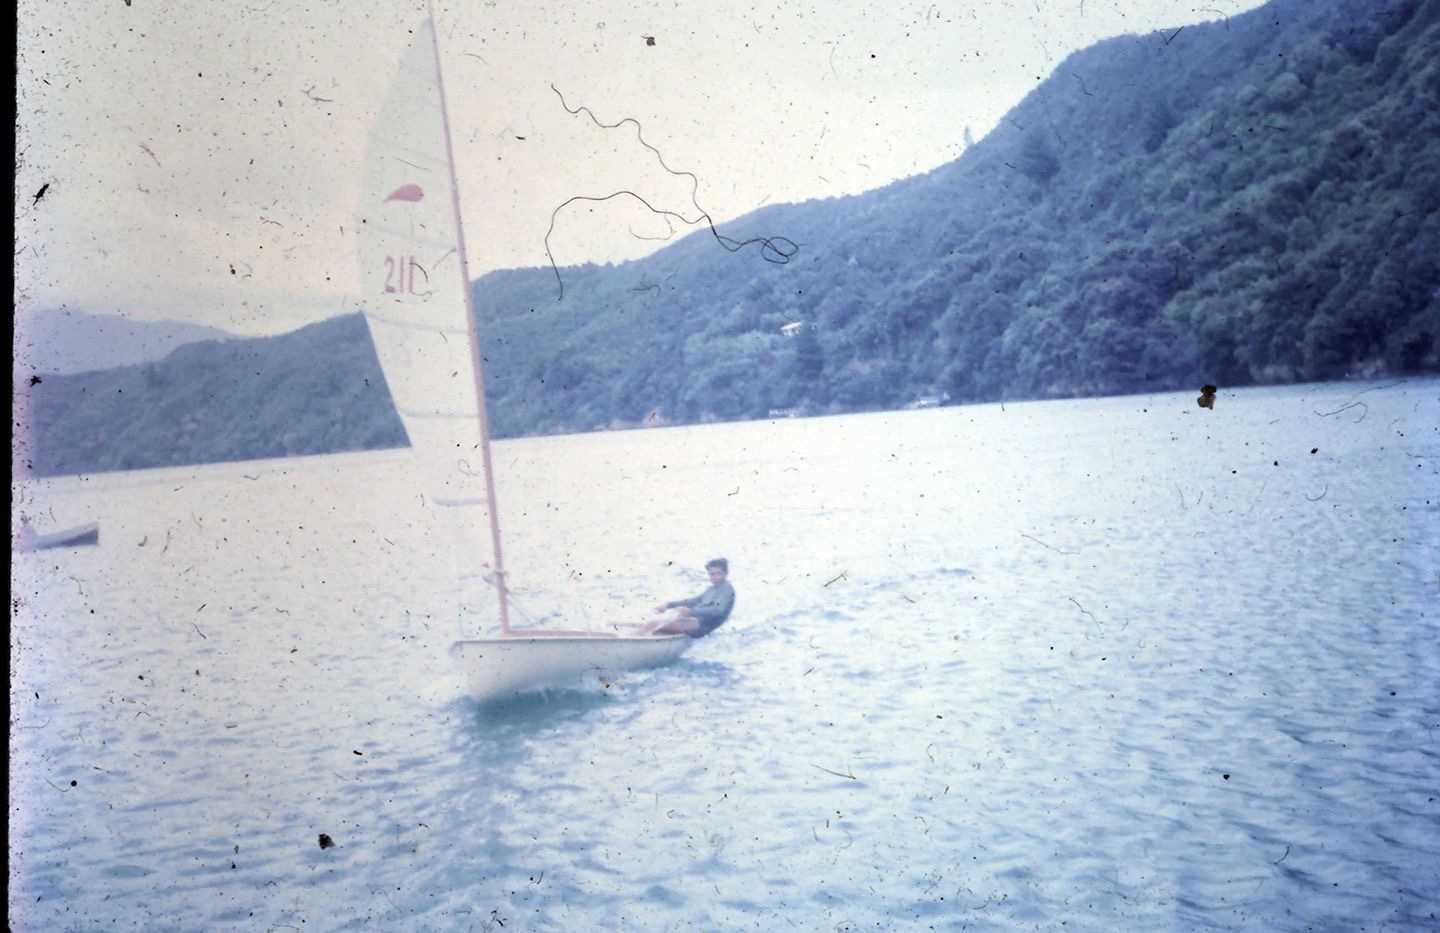 Chris Hargreaves, aged 11, sailing a Zephyr in Lochmara Bay in 1963